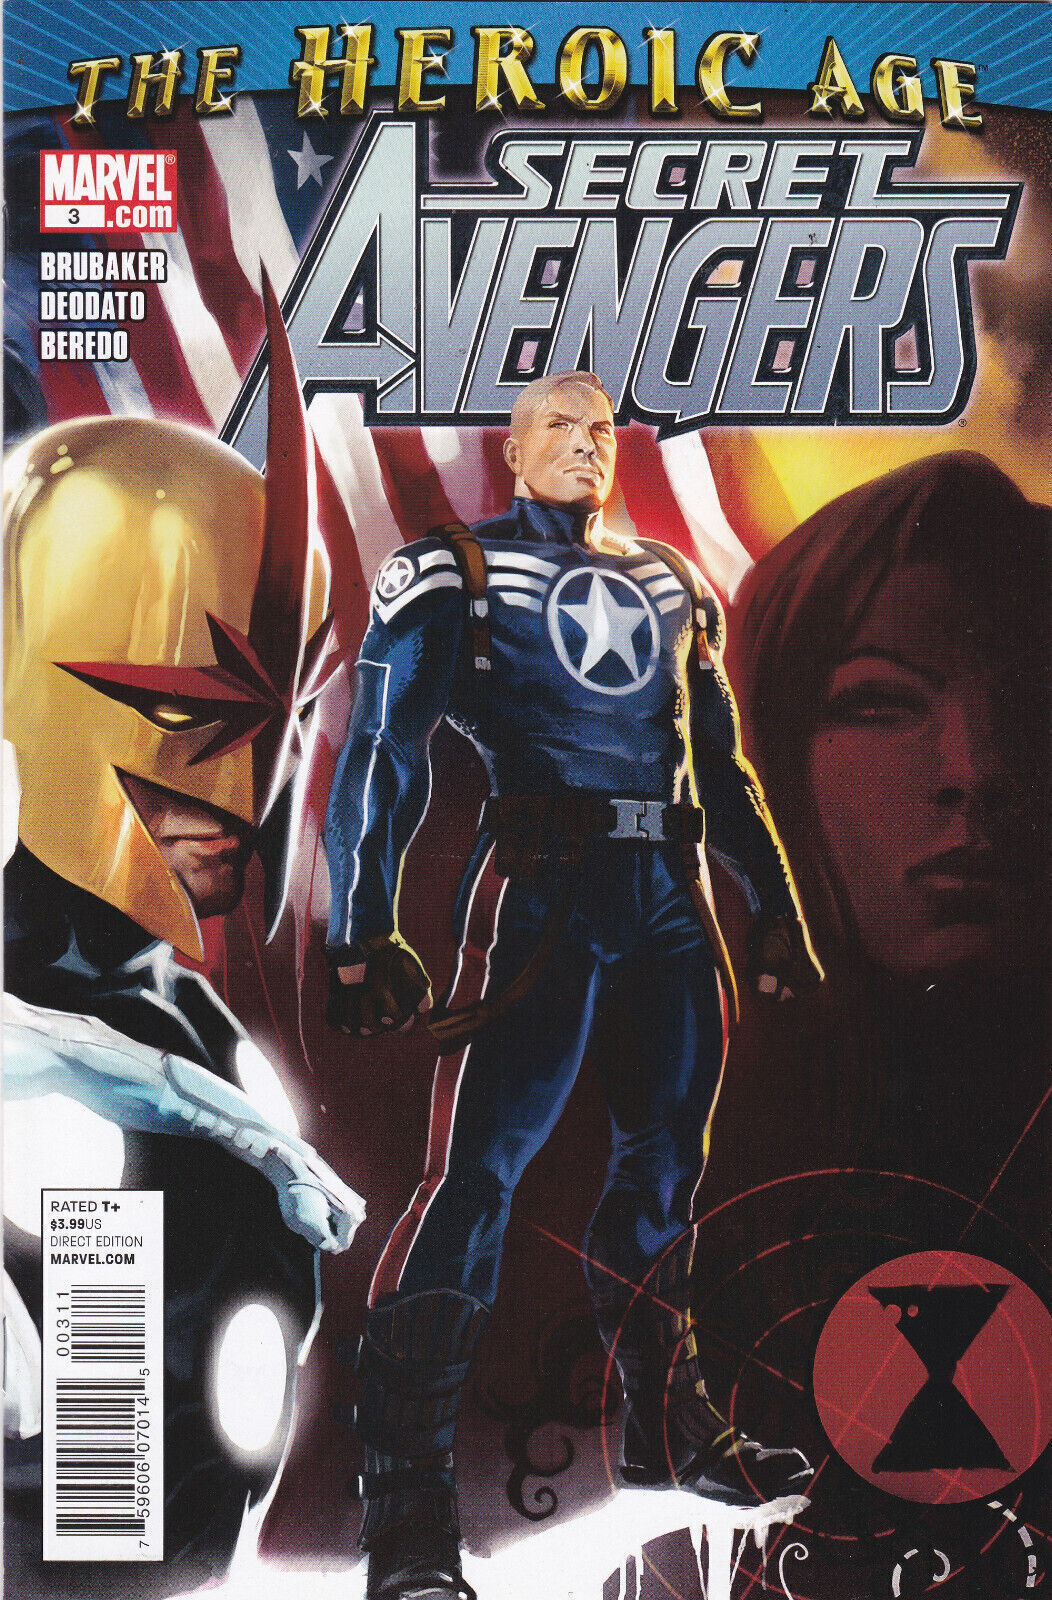 Secret Avengers #3 Vol. 1 (Marvel, 2011) ungraded, High Grade